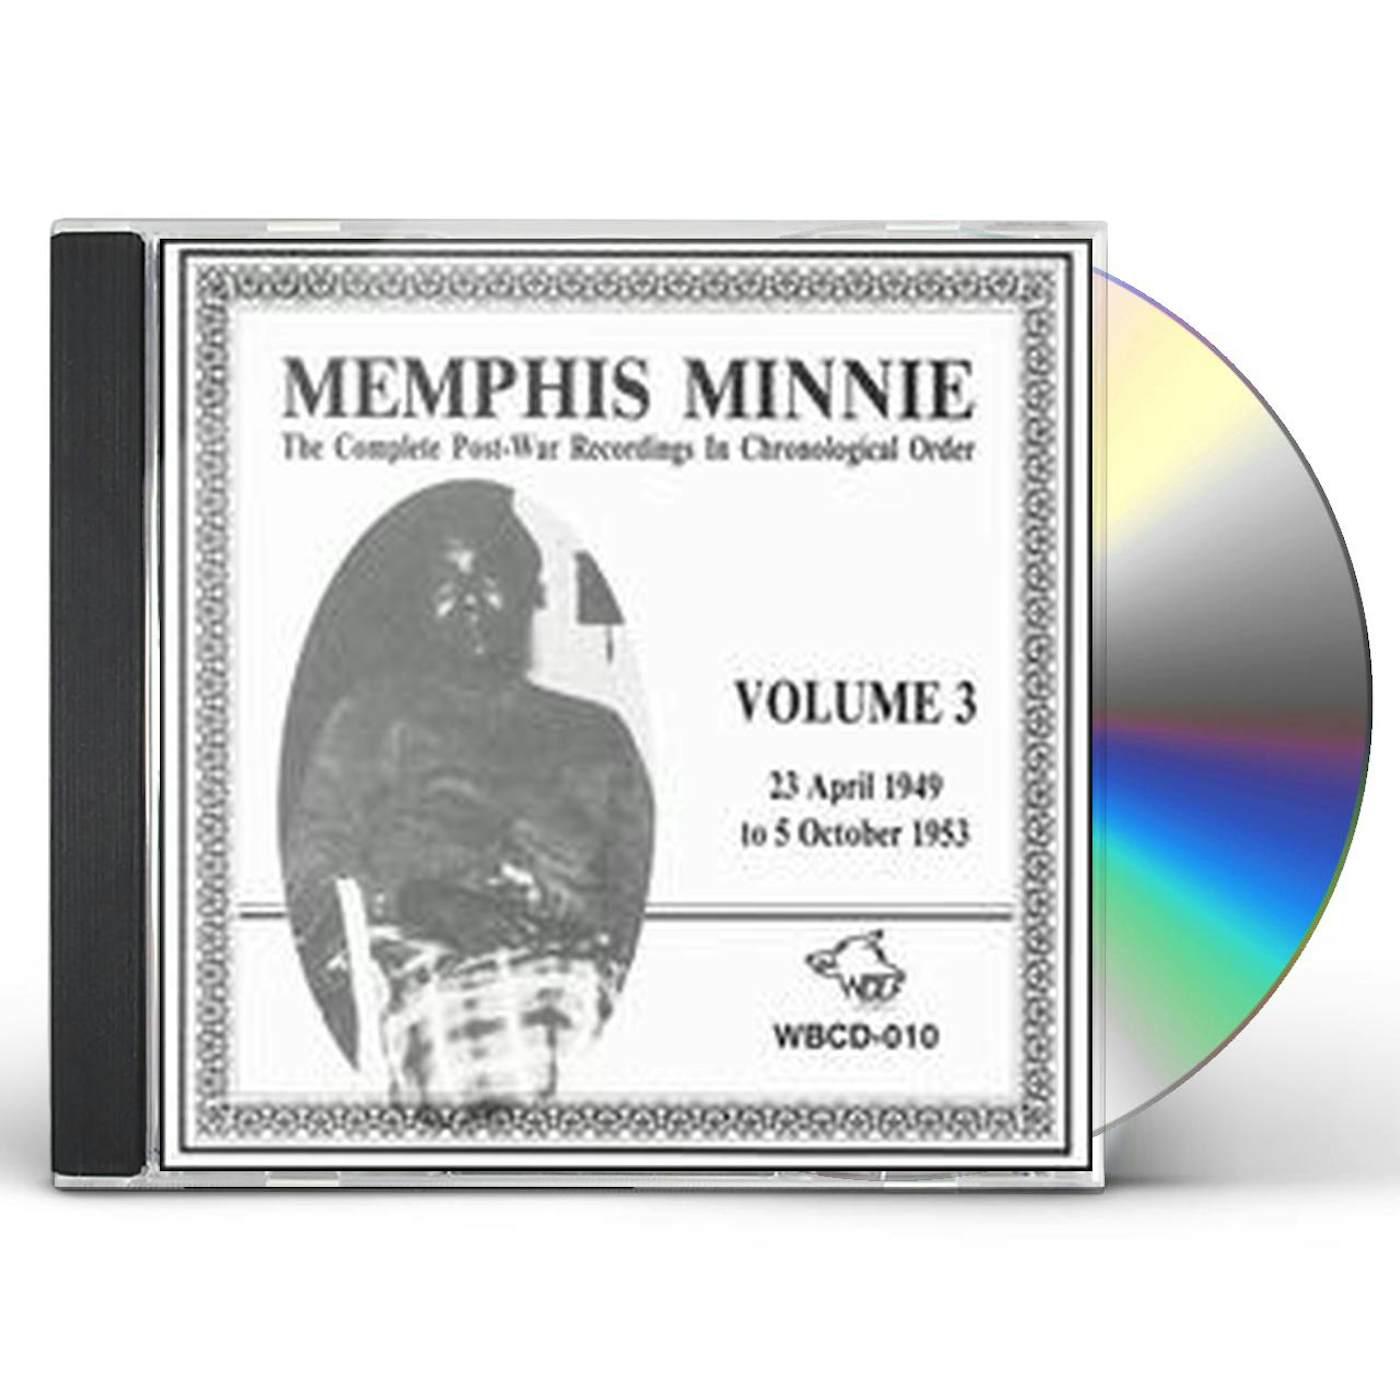 Memphis Minnie 1949-53 COMPLETE RECORDINGS 3 CD